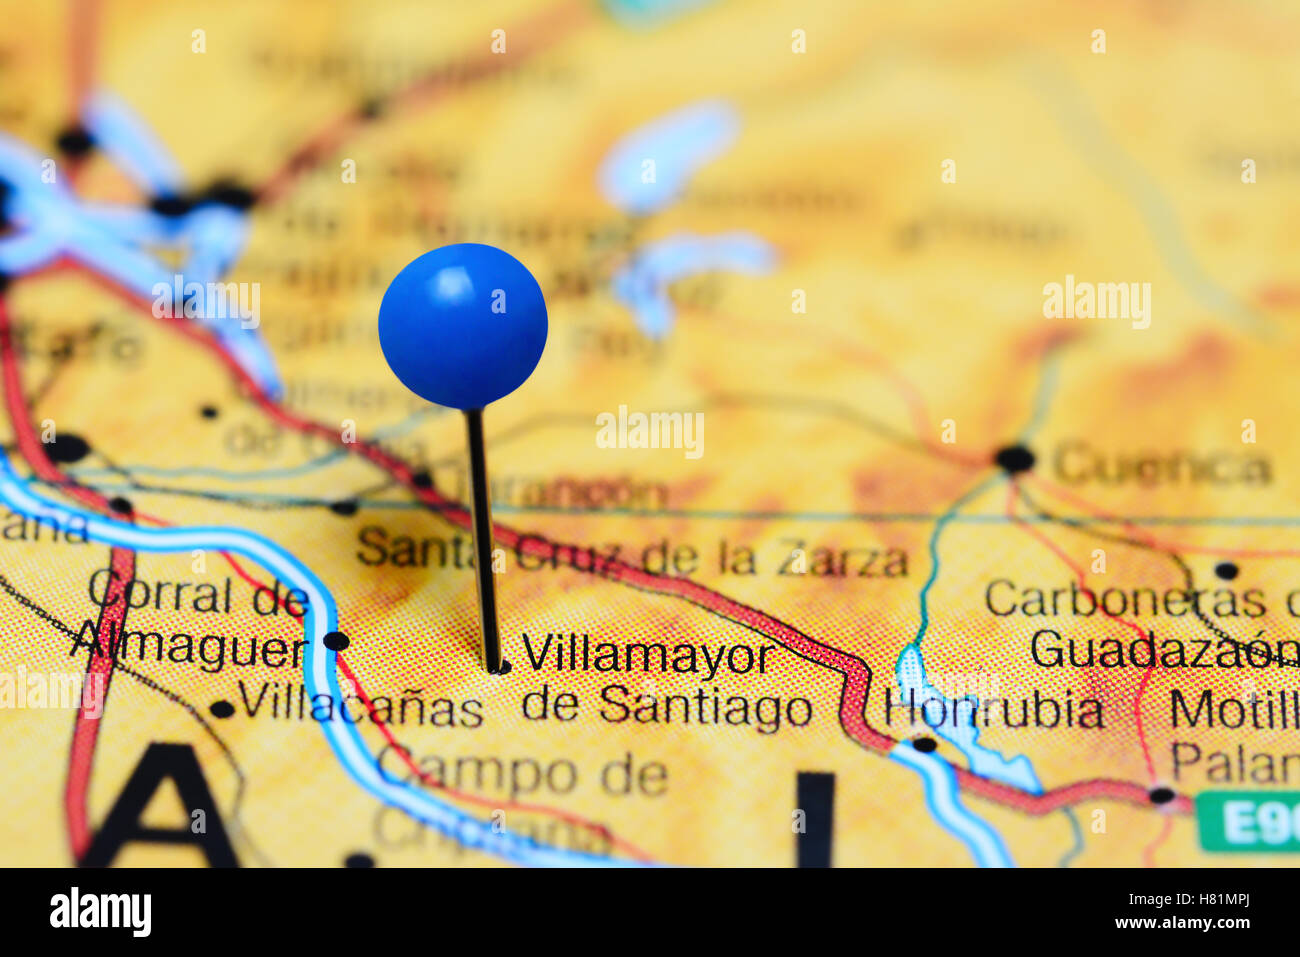 Villamayor de Santiago pinned on a map of Spain Stock Photo